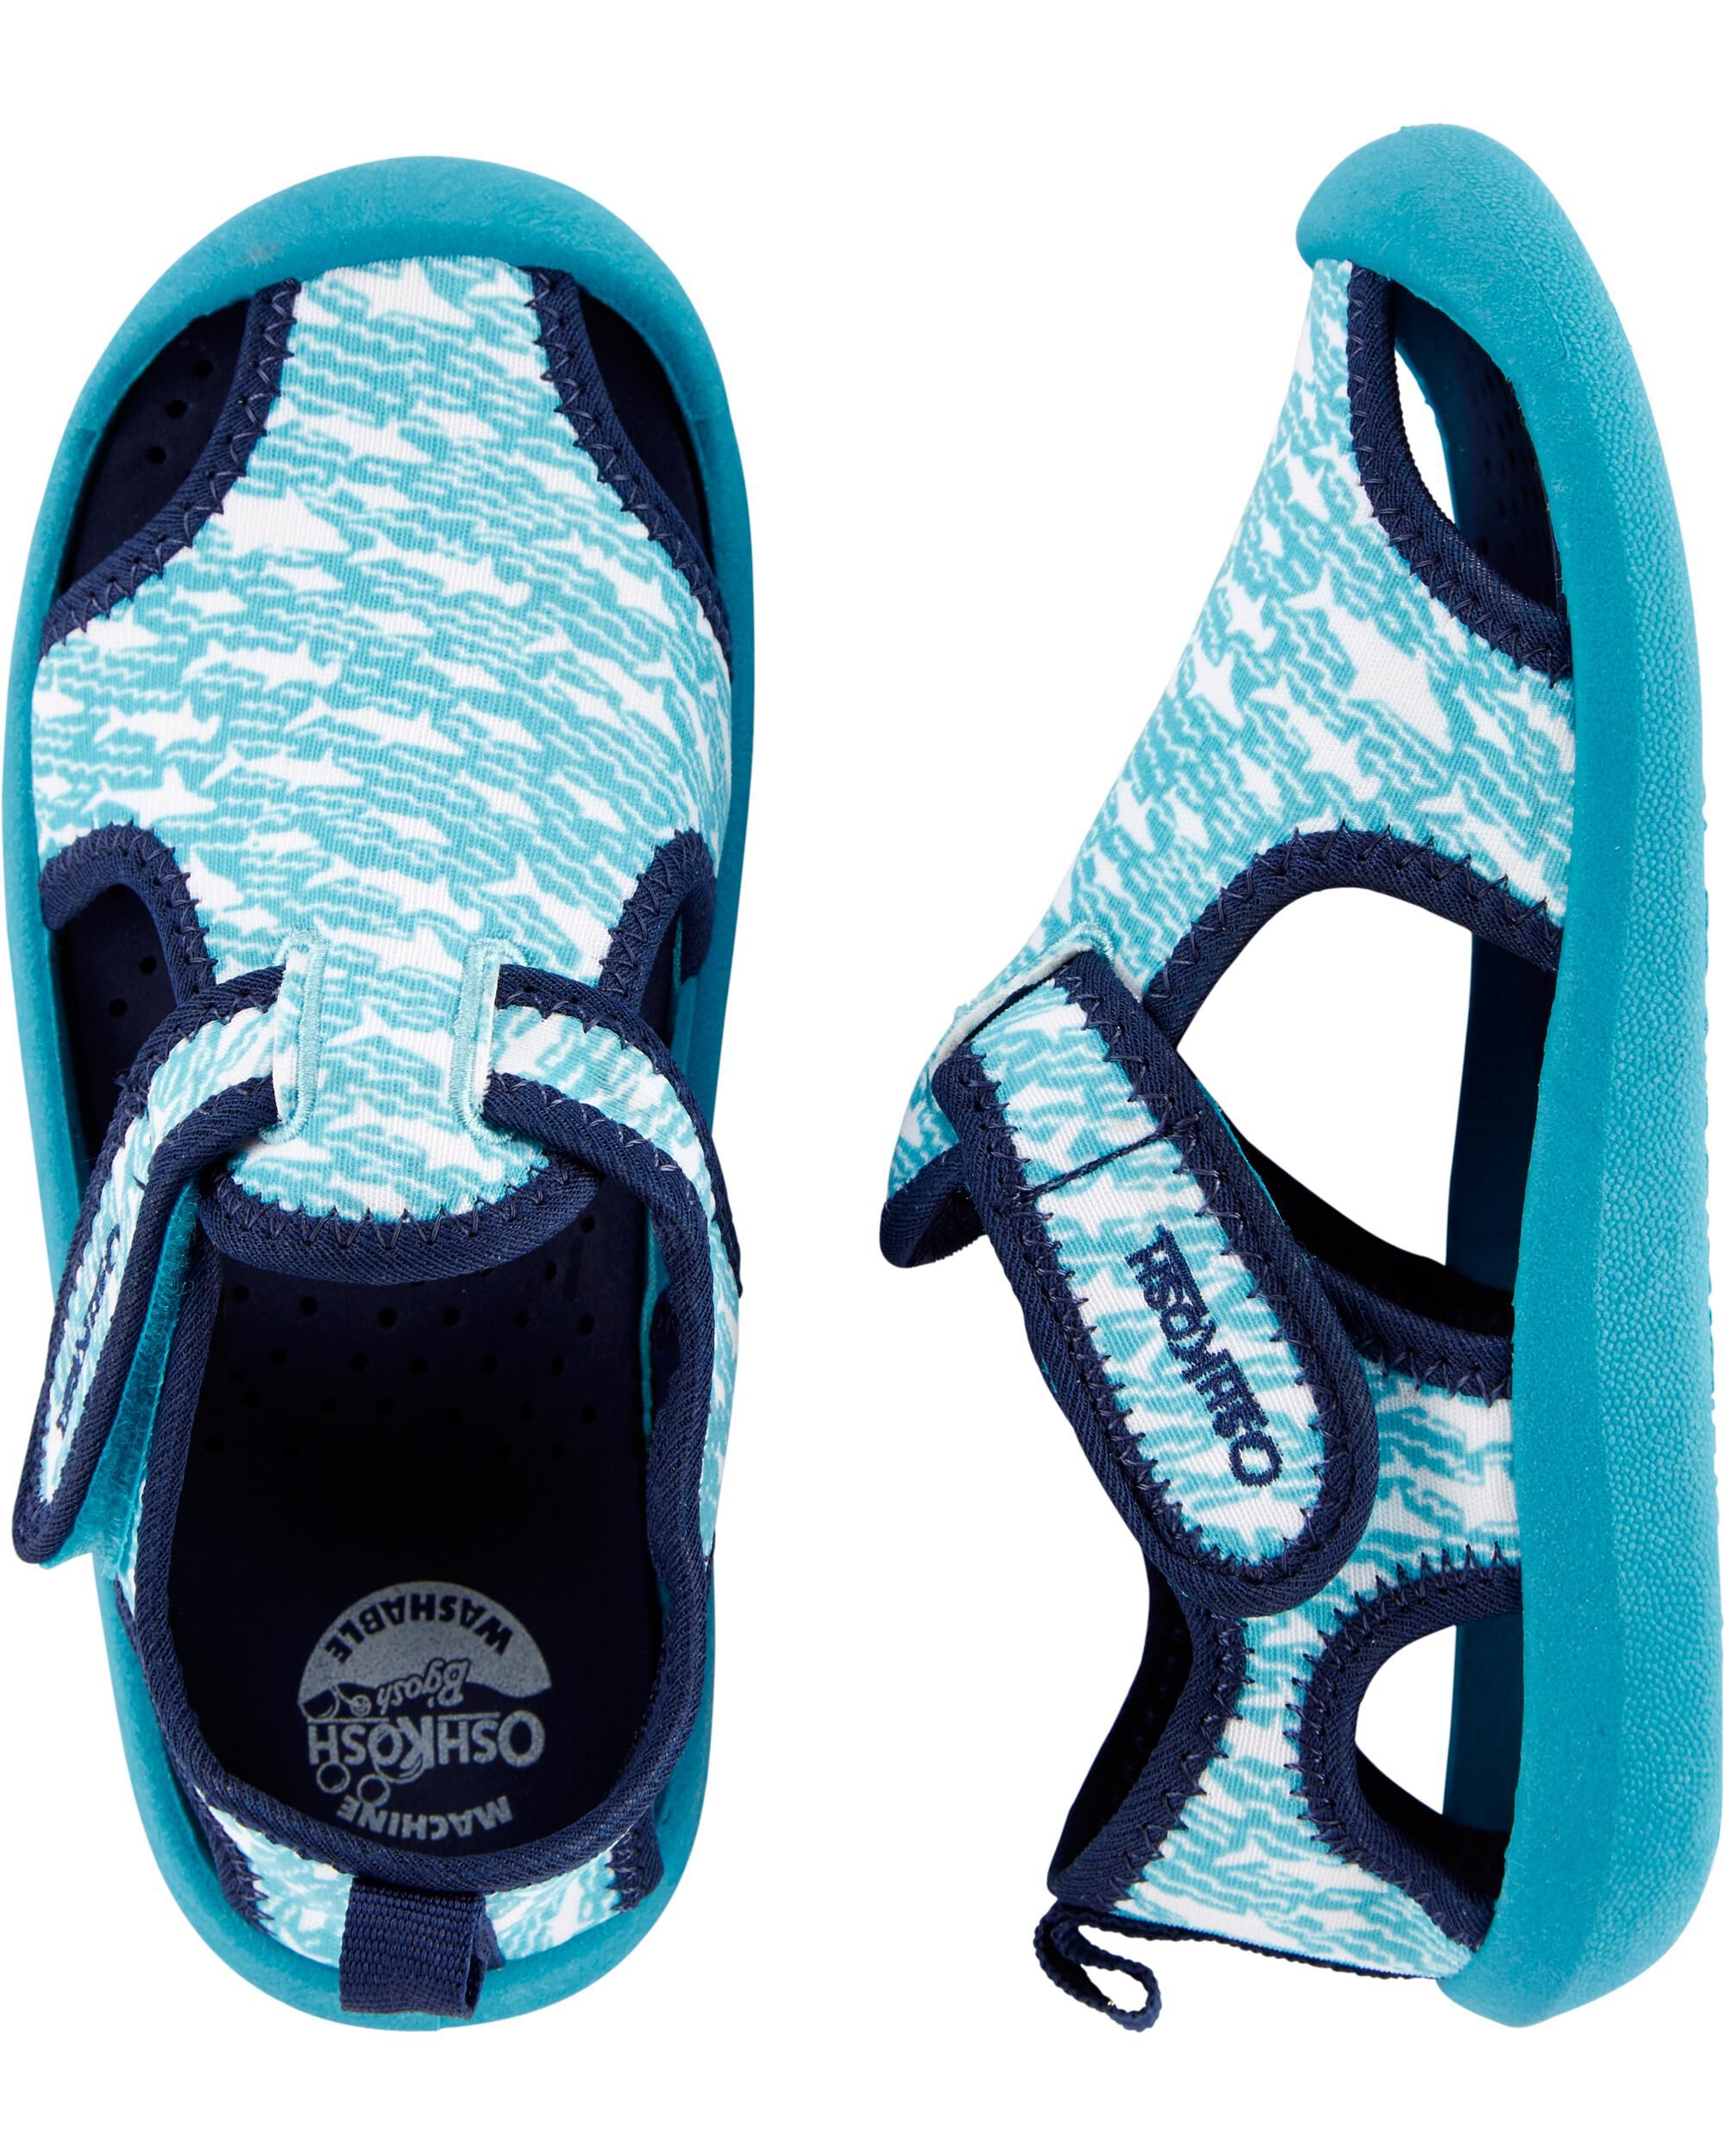 OshKosh Shark Water Shoes | carters.com